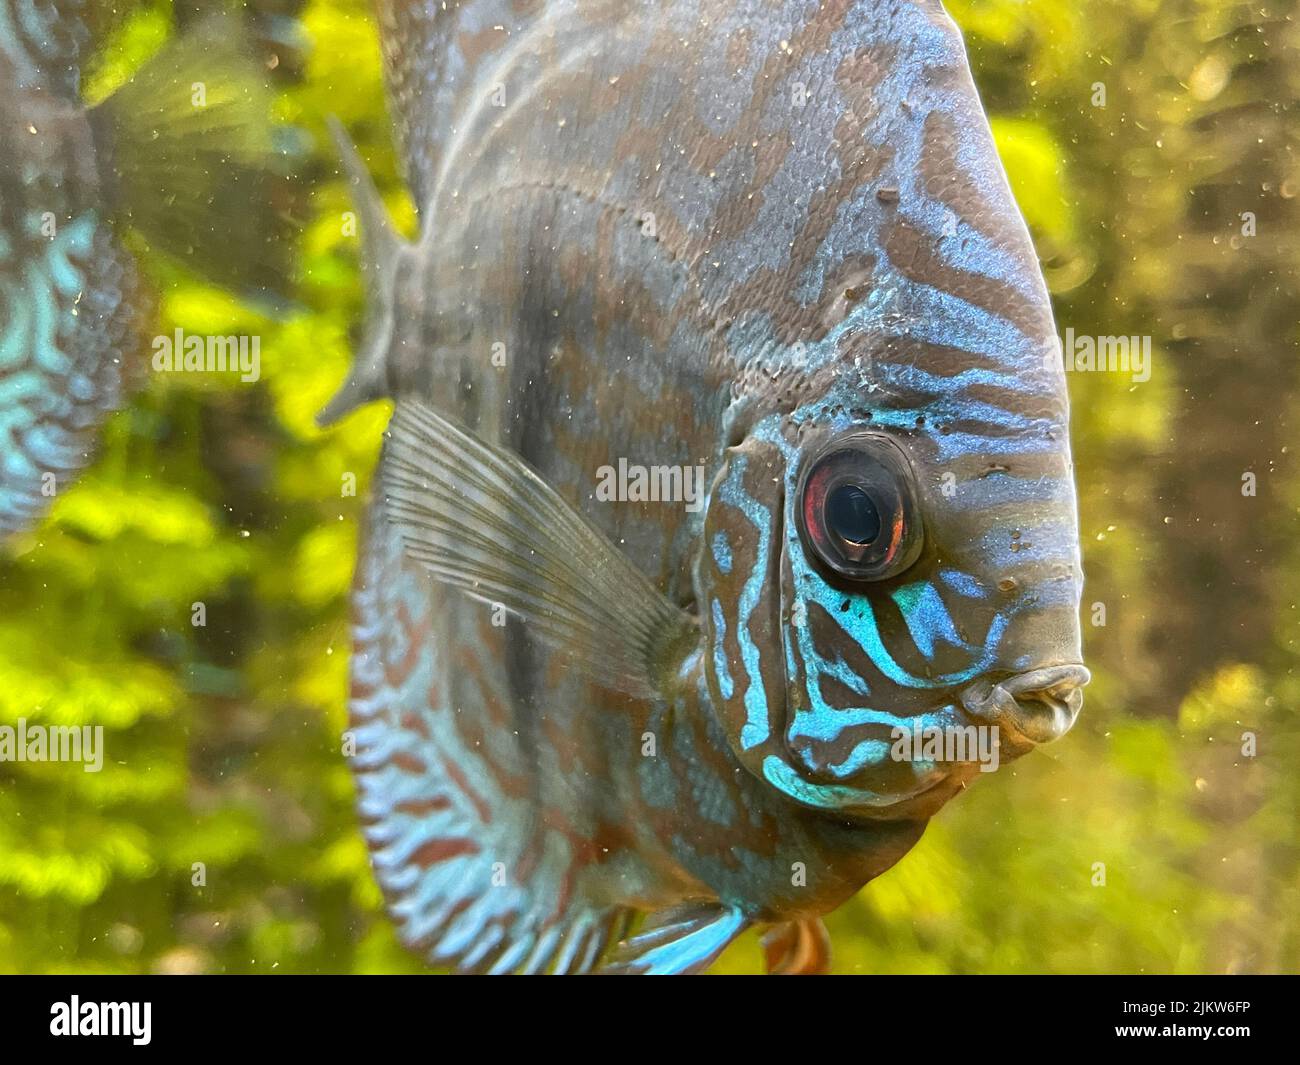 A closeup shot of Discus fish swimming in an aquarium Stock Photo